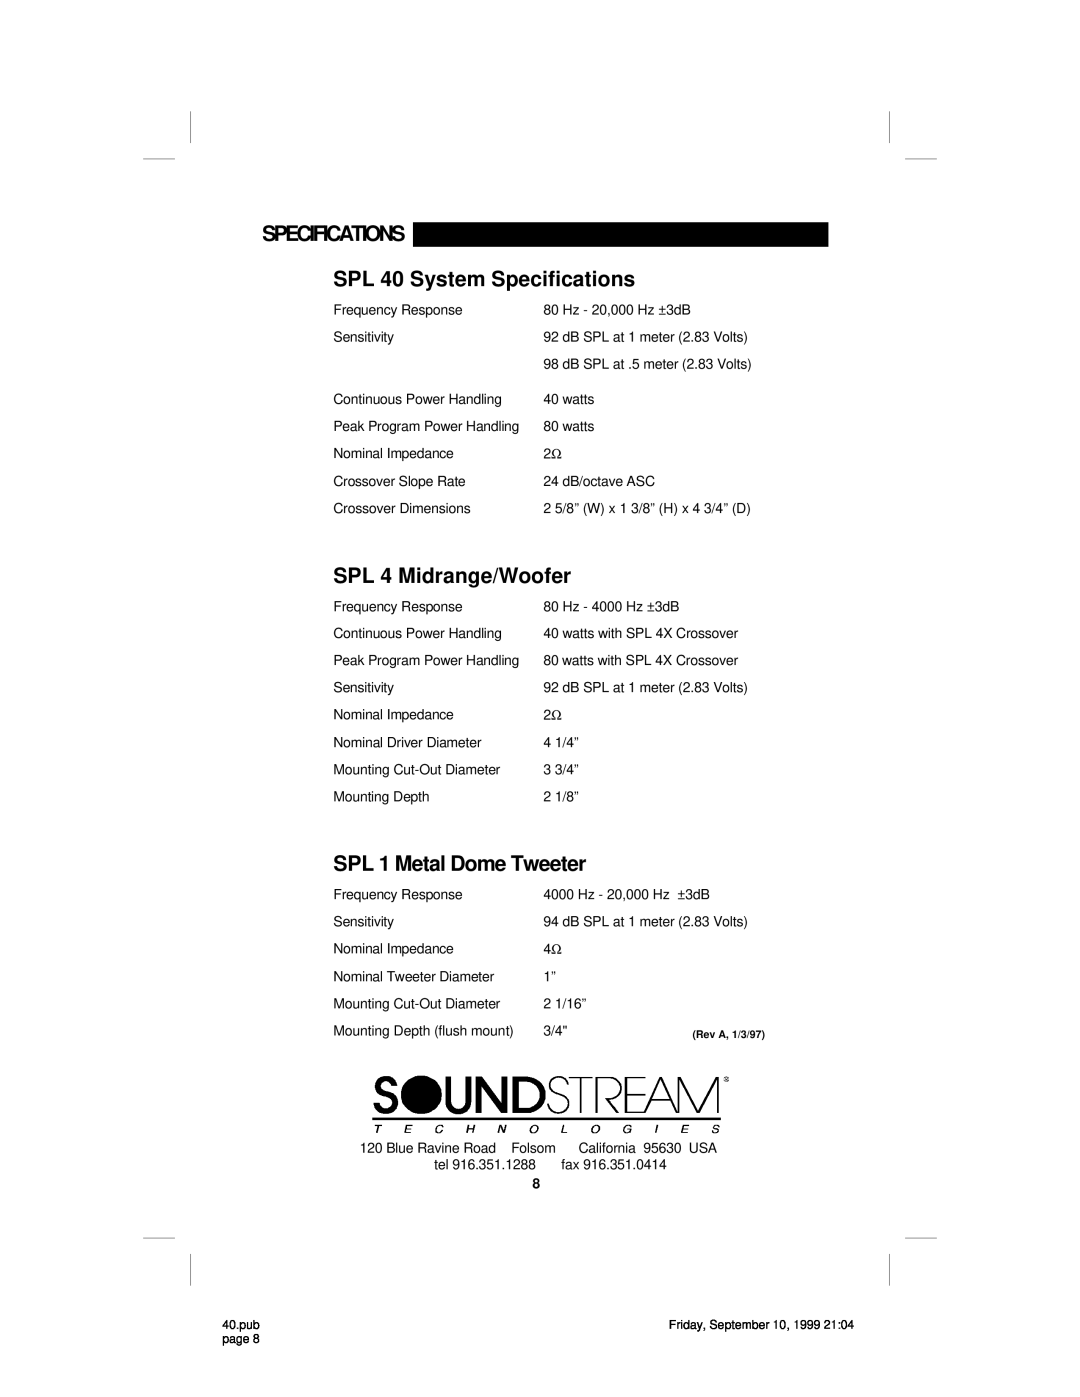 Soundstream Technologies SPL40 SPL 40 System Specifications, SPL 4 Midrange/Woofer, SPL 1 Metal Dome Tweeter 